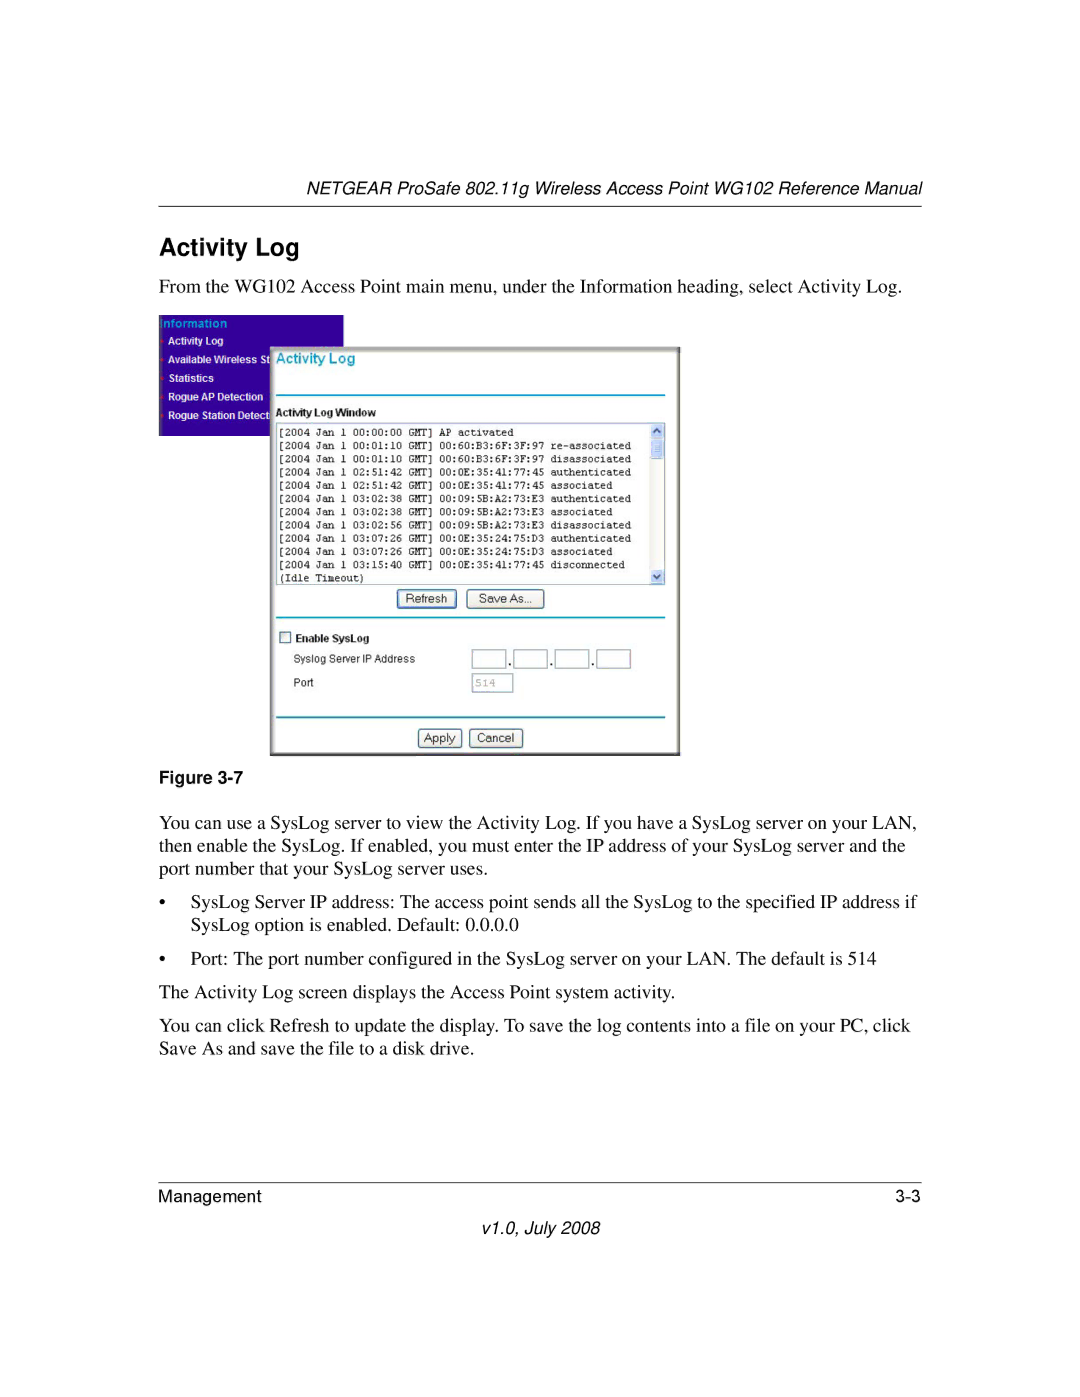 NETGEAR WG102NA manual Activity Log 